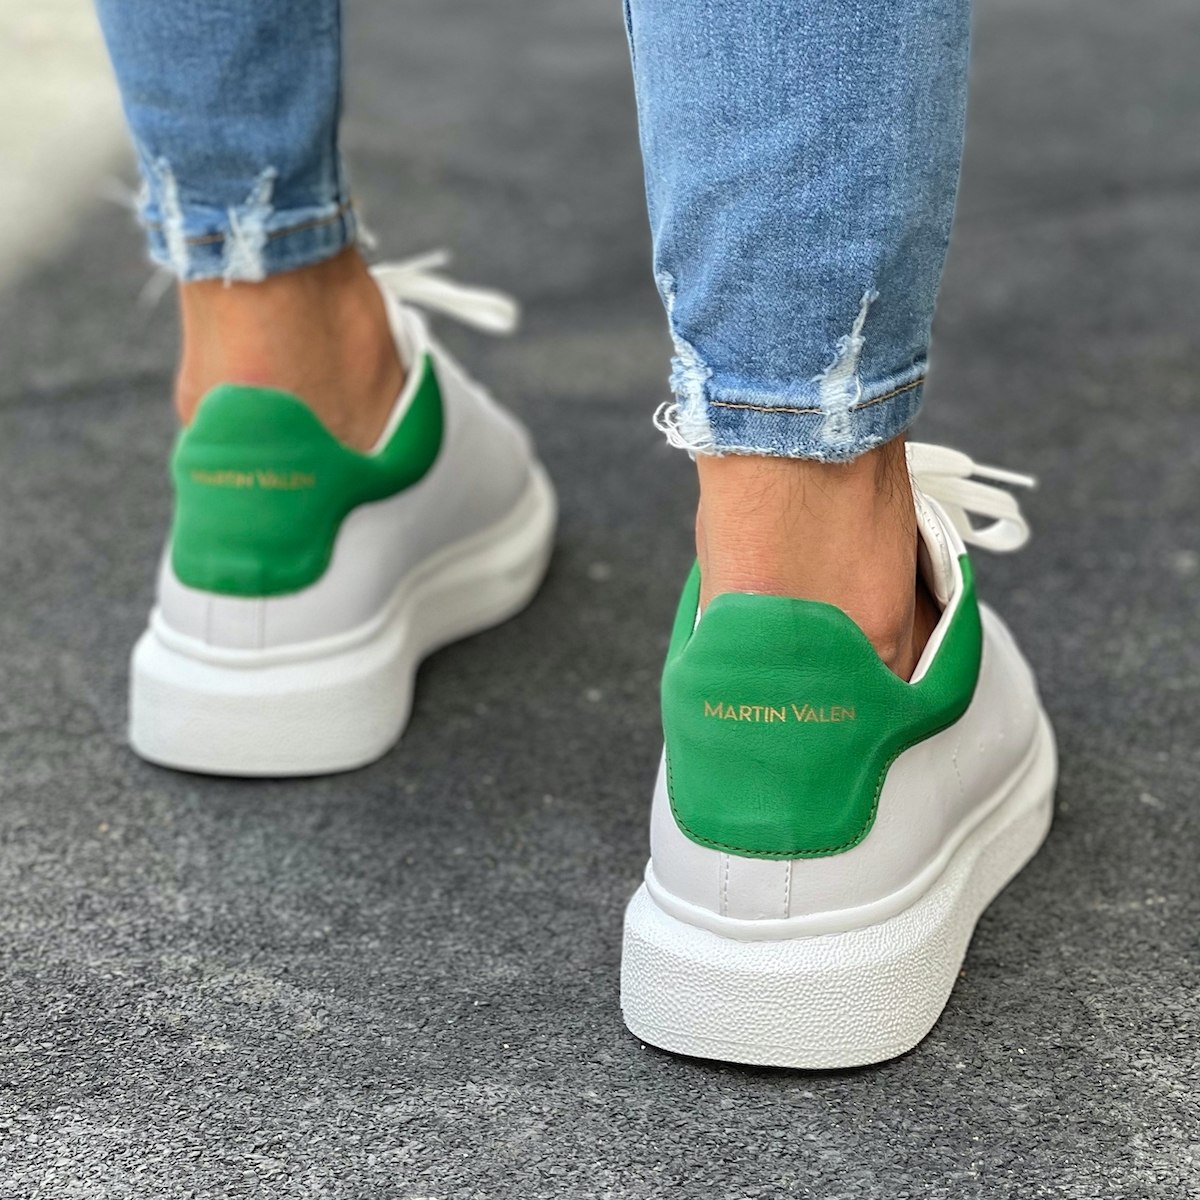 Herren hohe Sneakers Schuhe in weiss-grün | Martin Valen